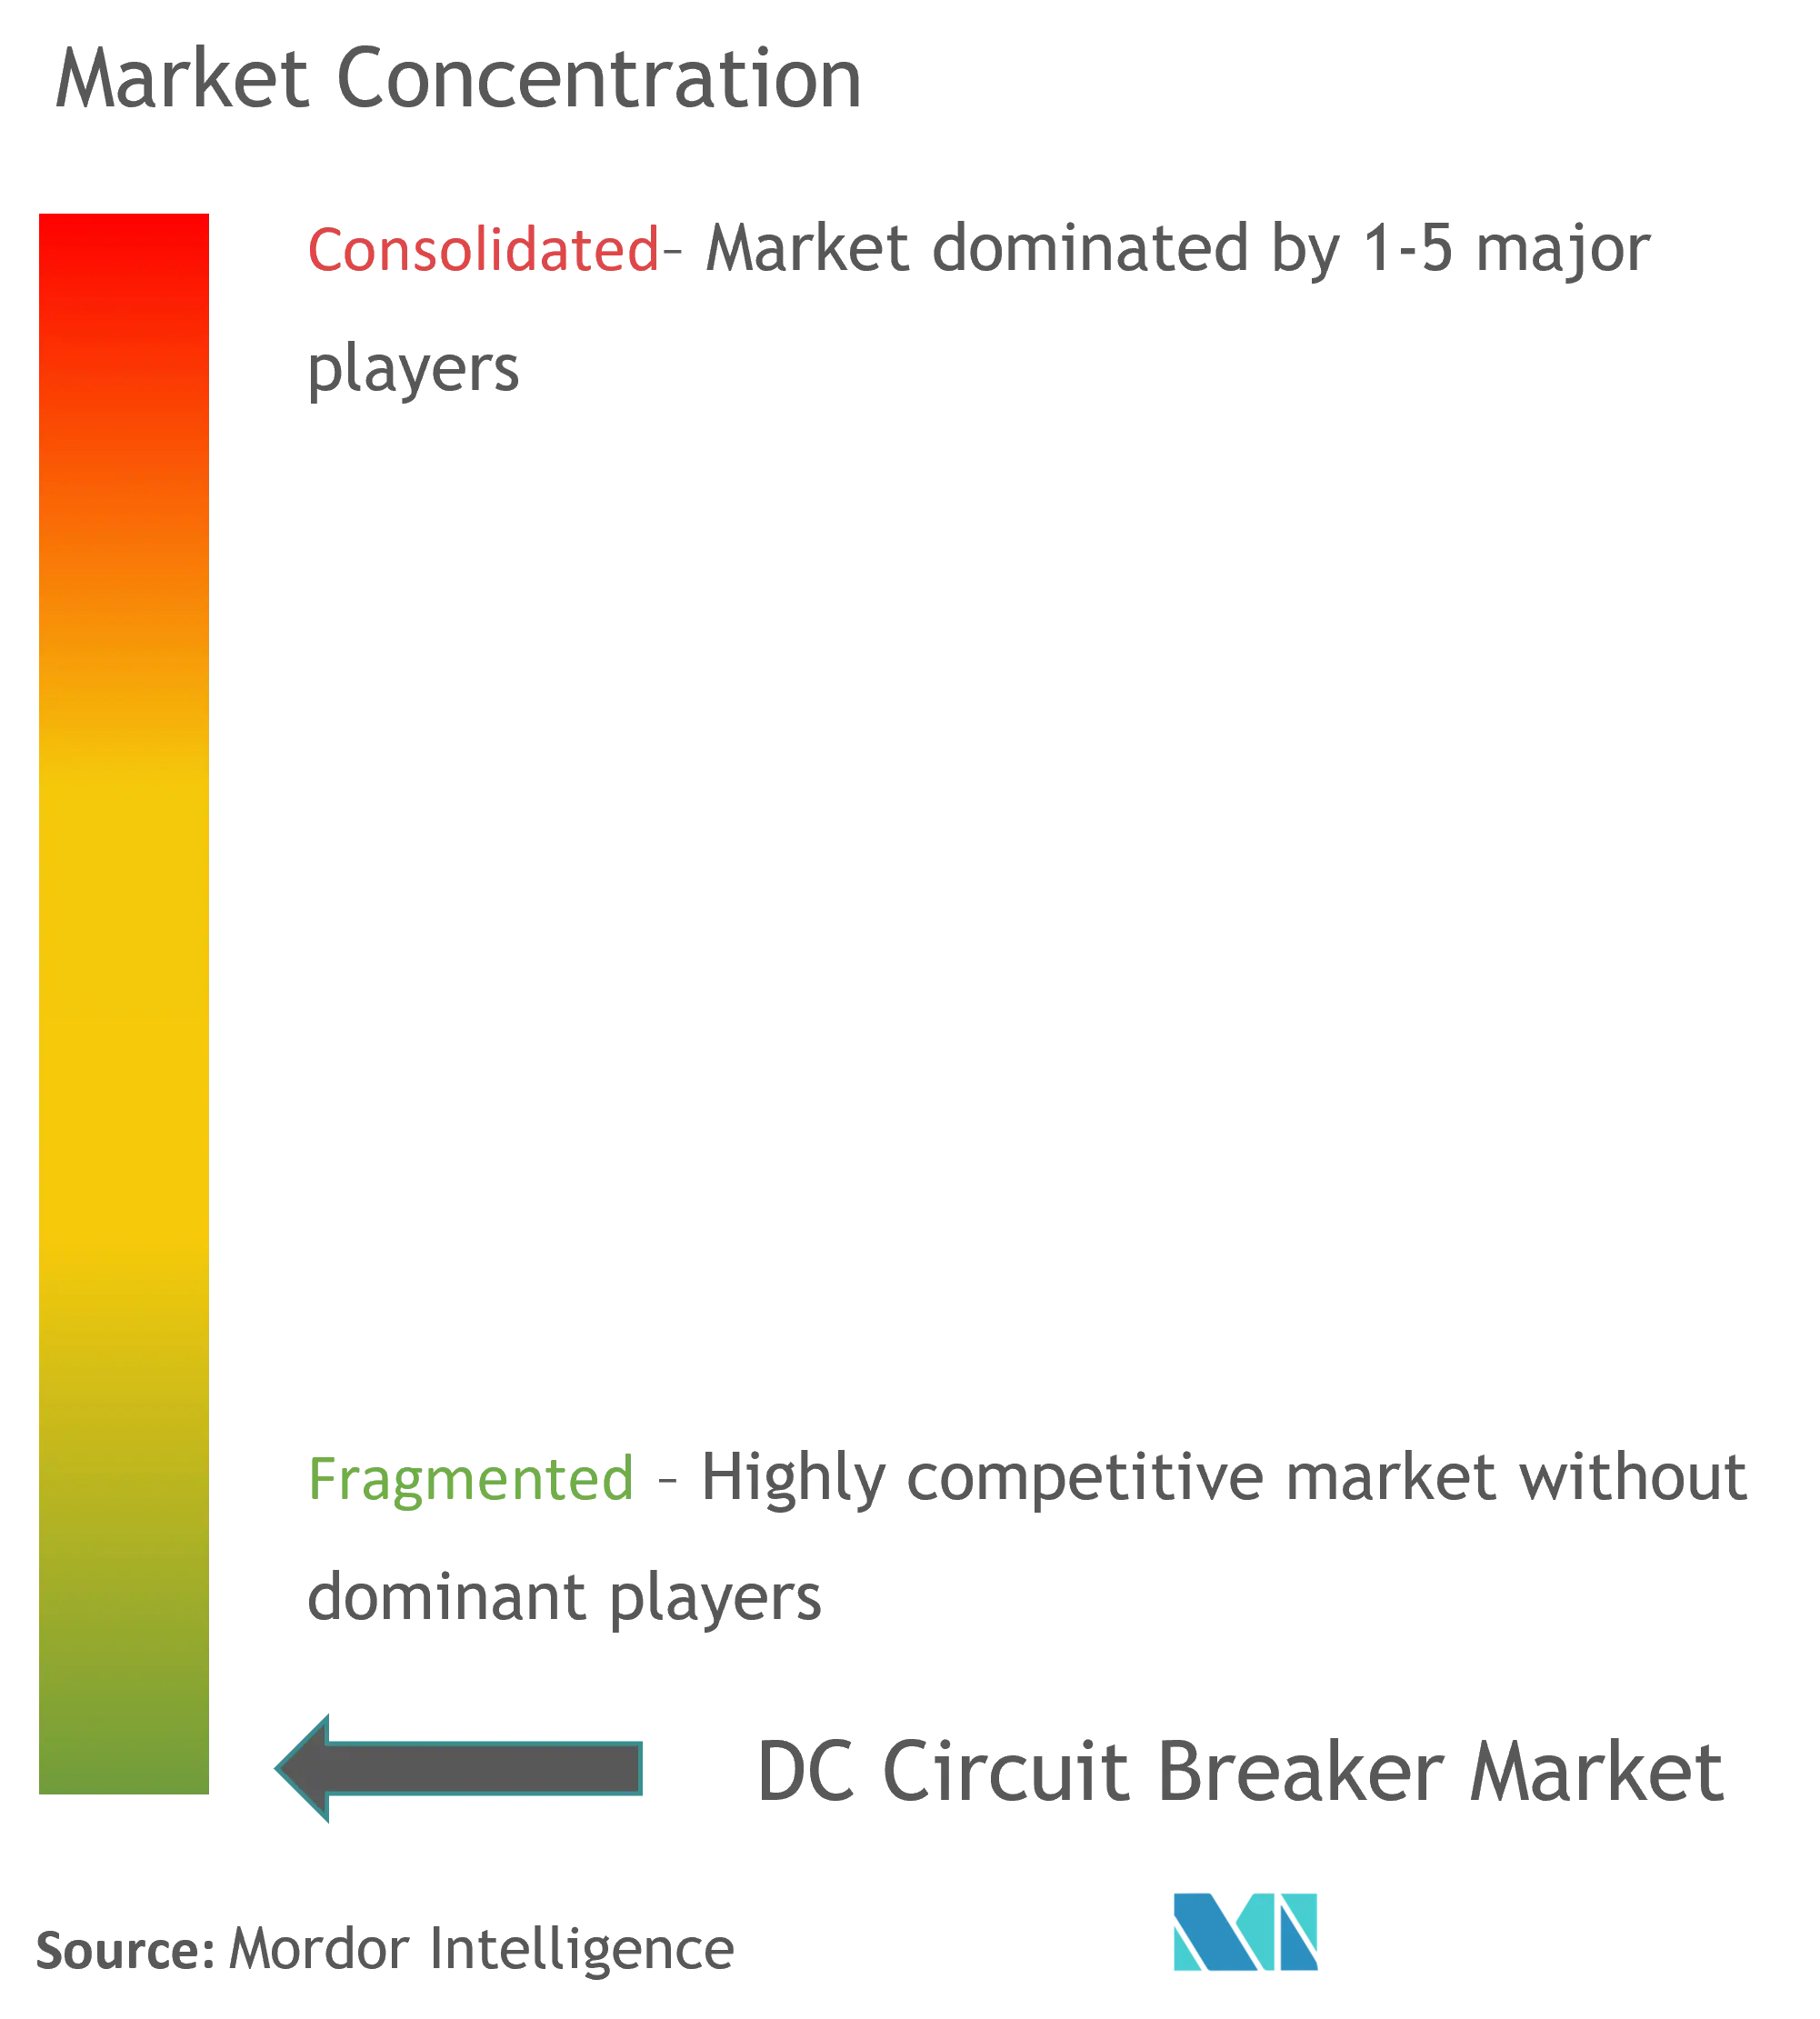 DC Circuit Breaker Market Concentration